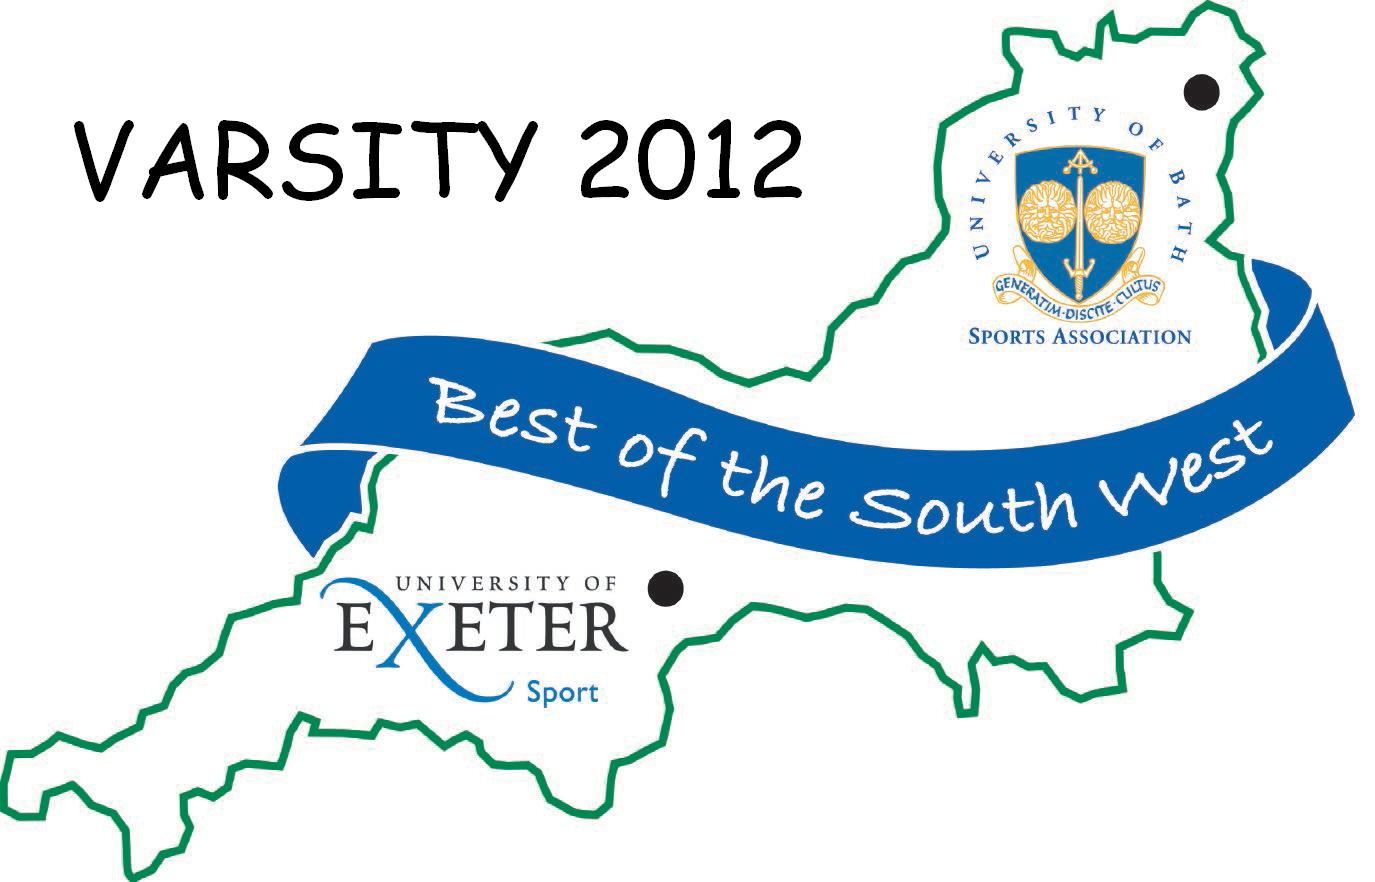 Bath University Logo